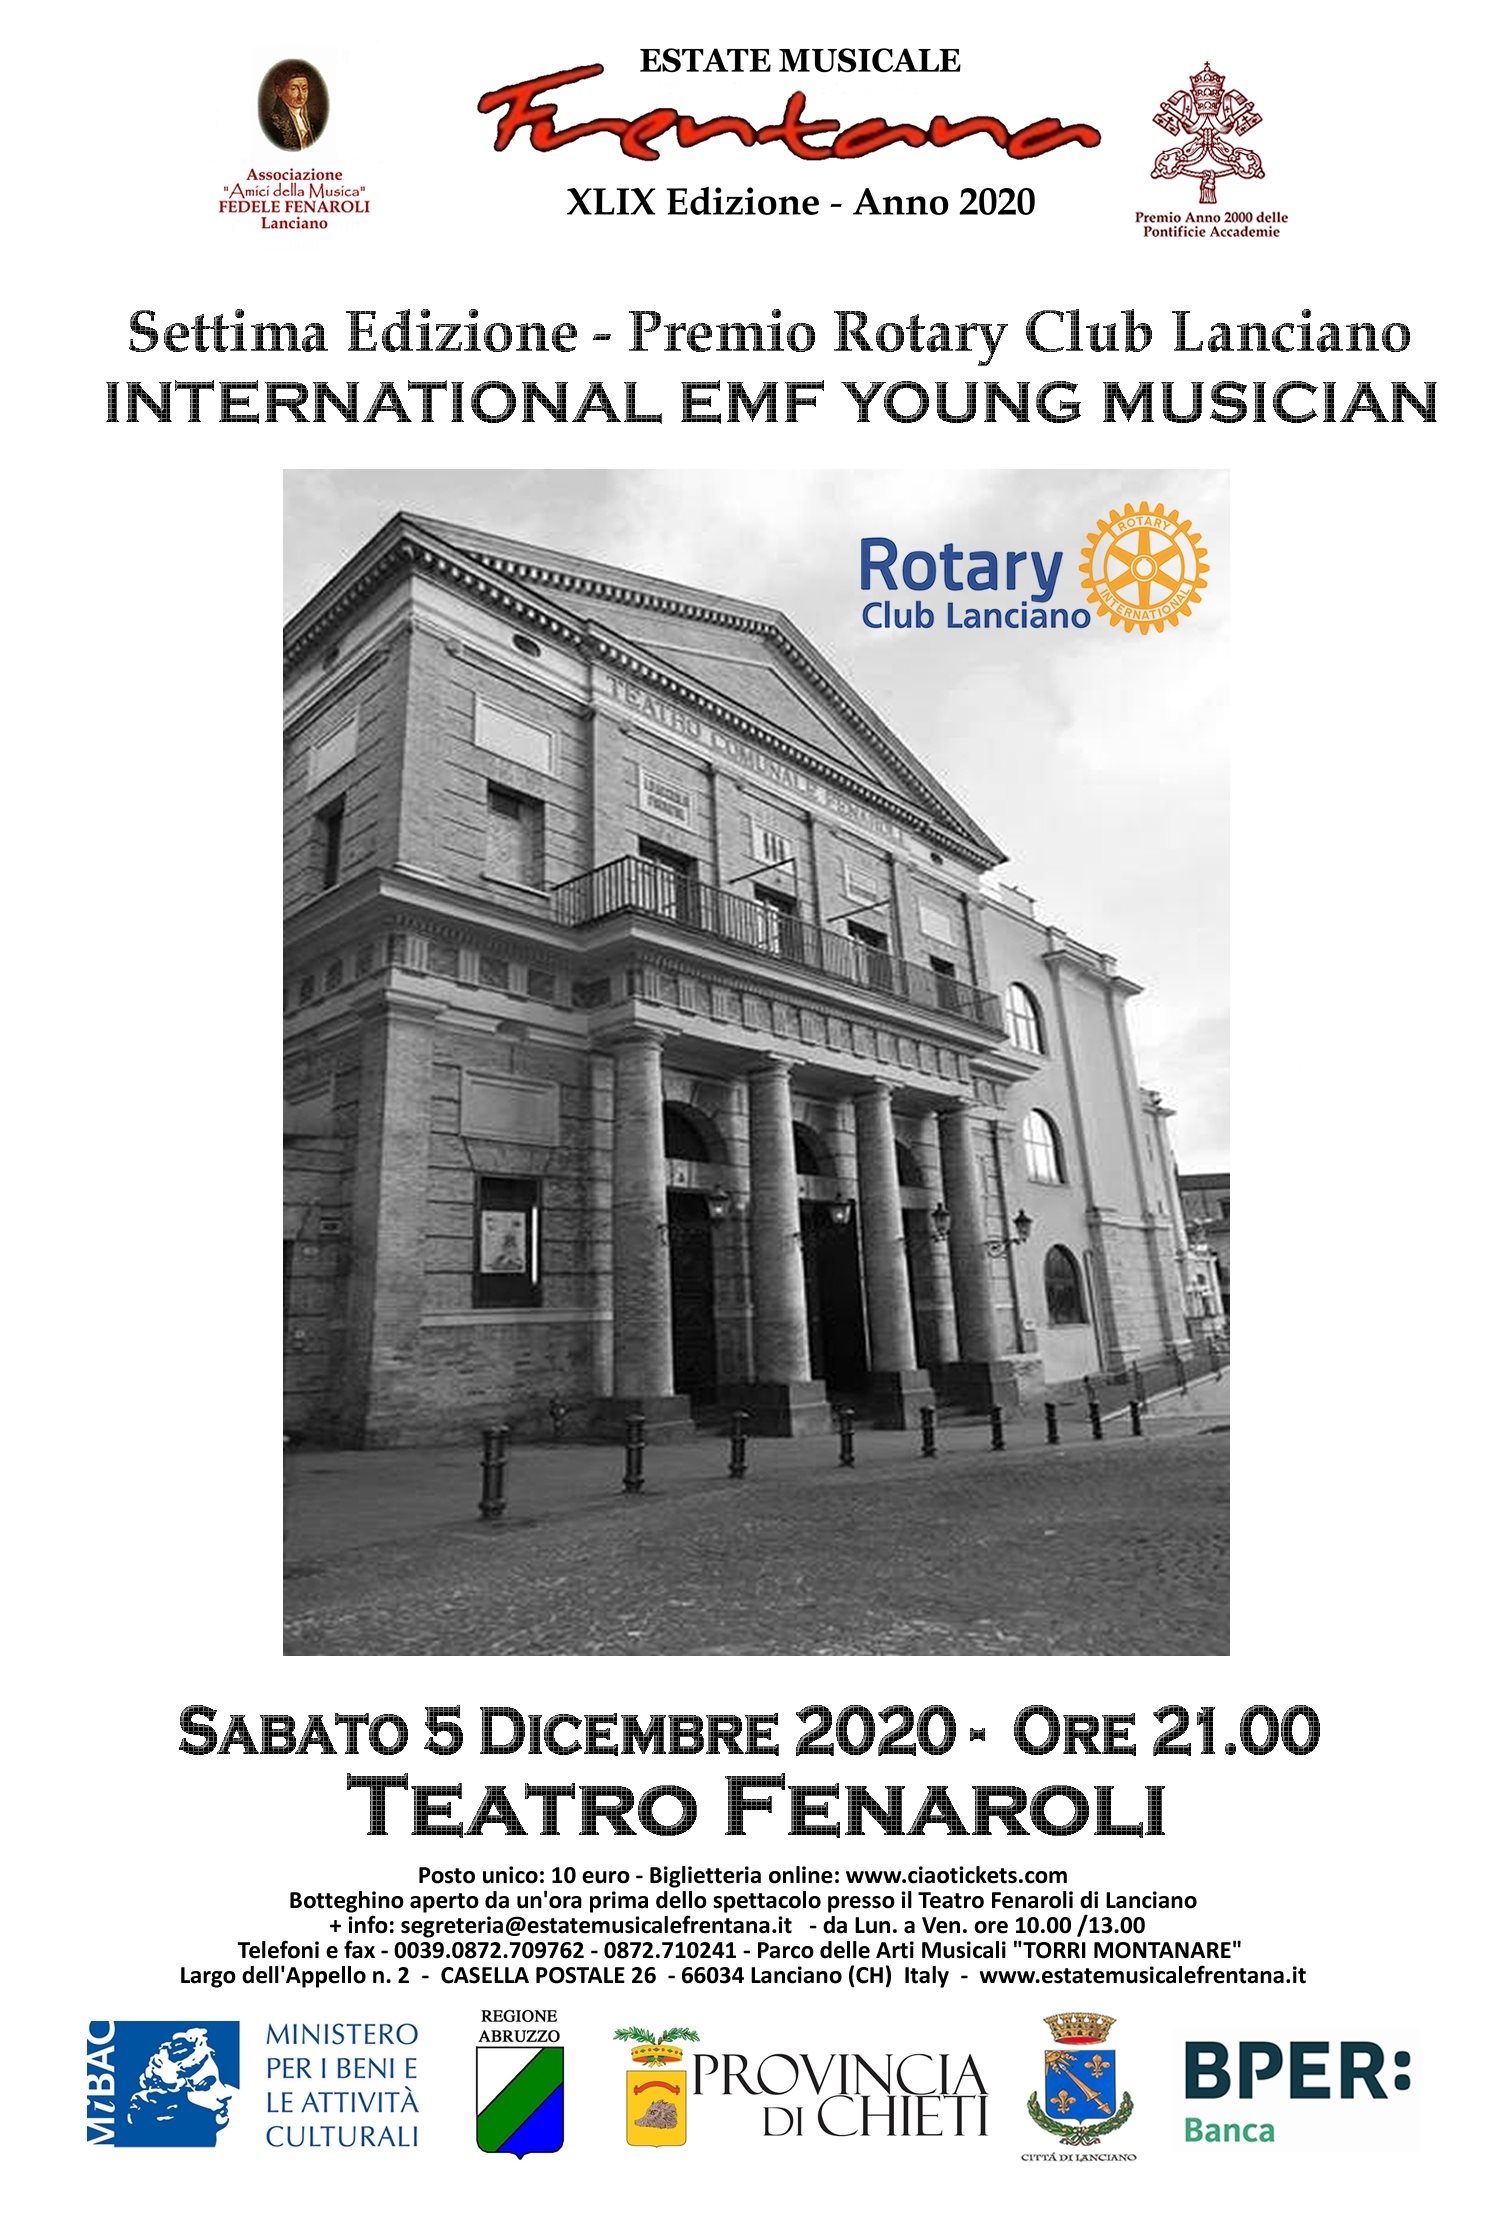 INTERNATIONAL EMF YOUNG MUSICIAN - Premio Rotary Club